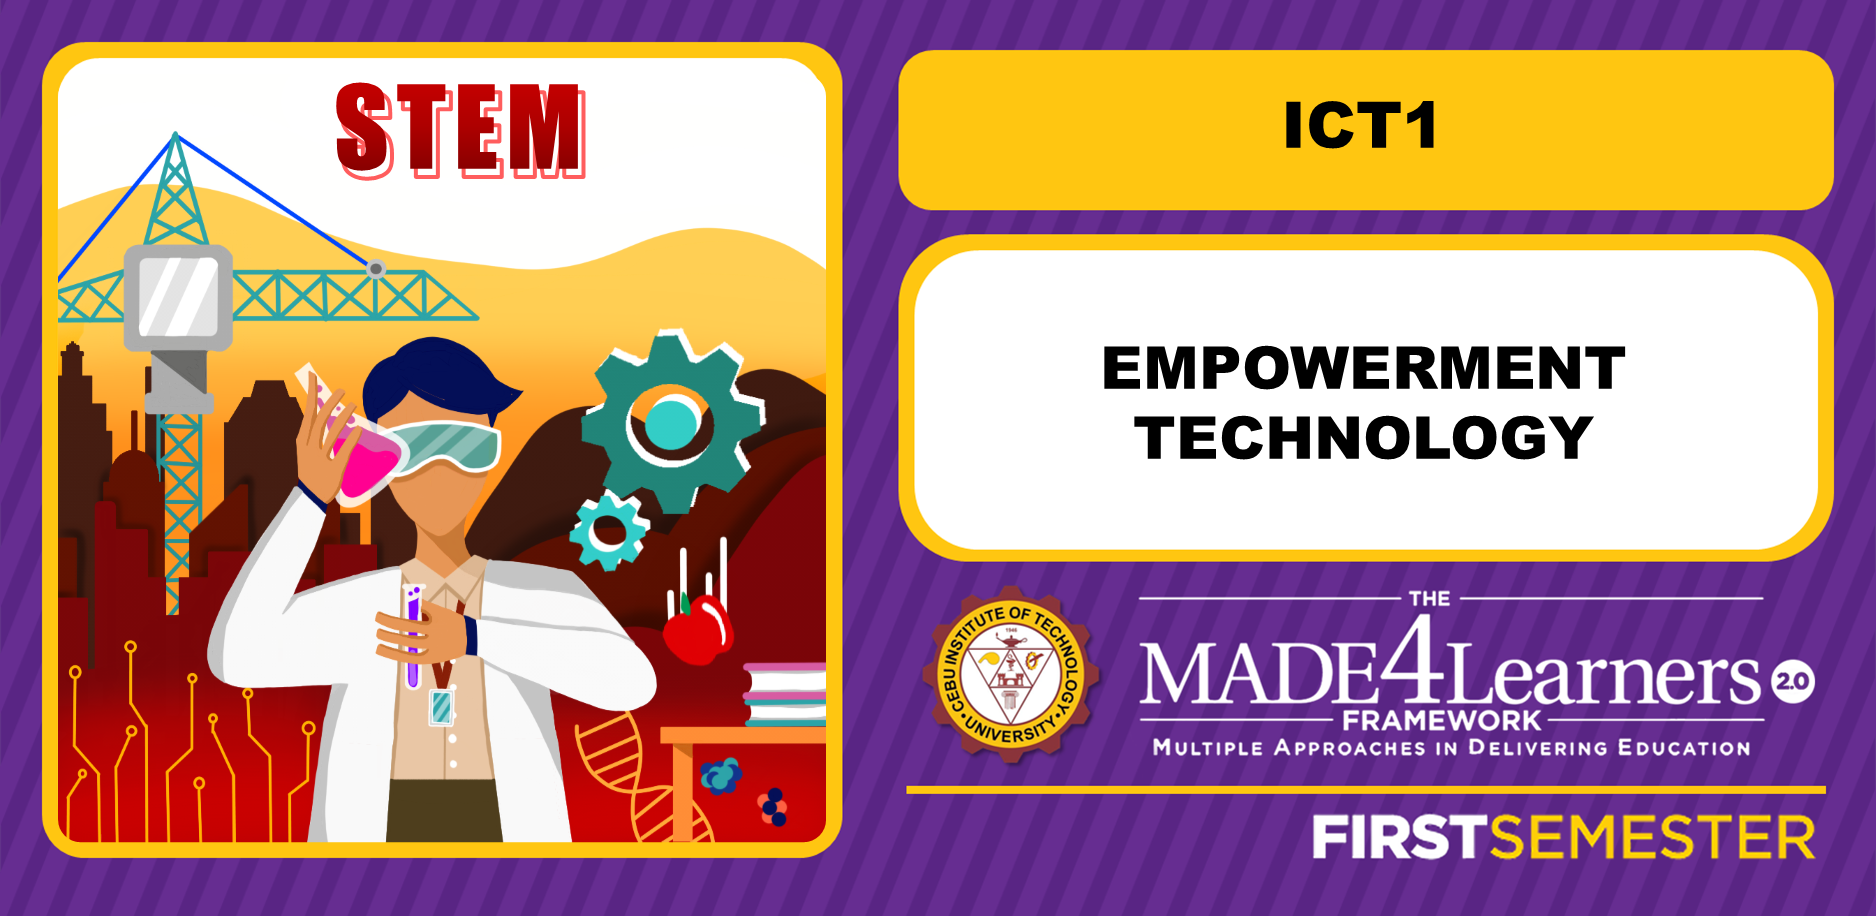 ICT1: Empowerment Technology (Jen Sasuman)